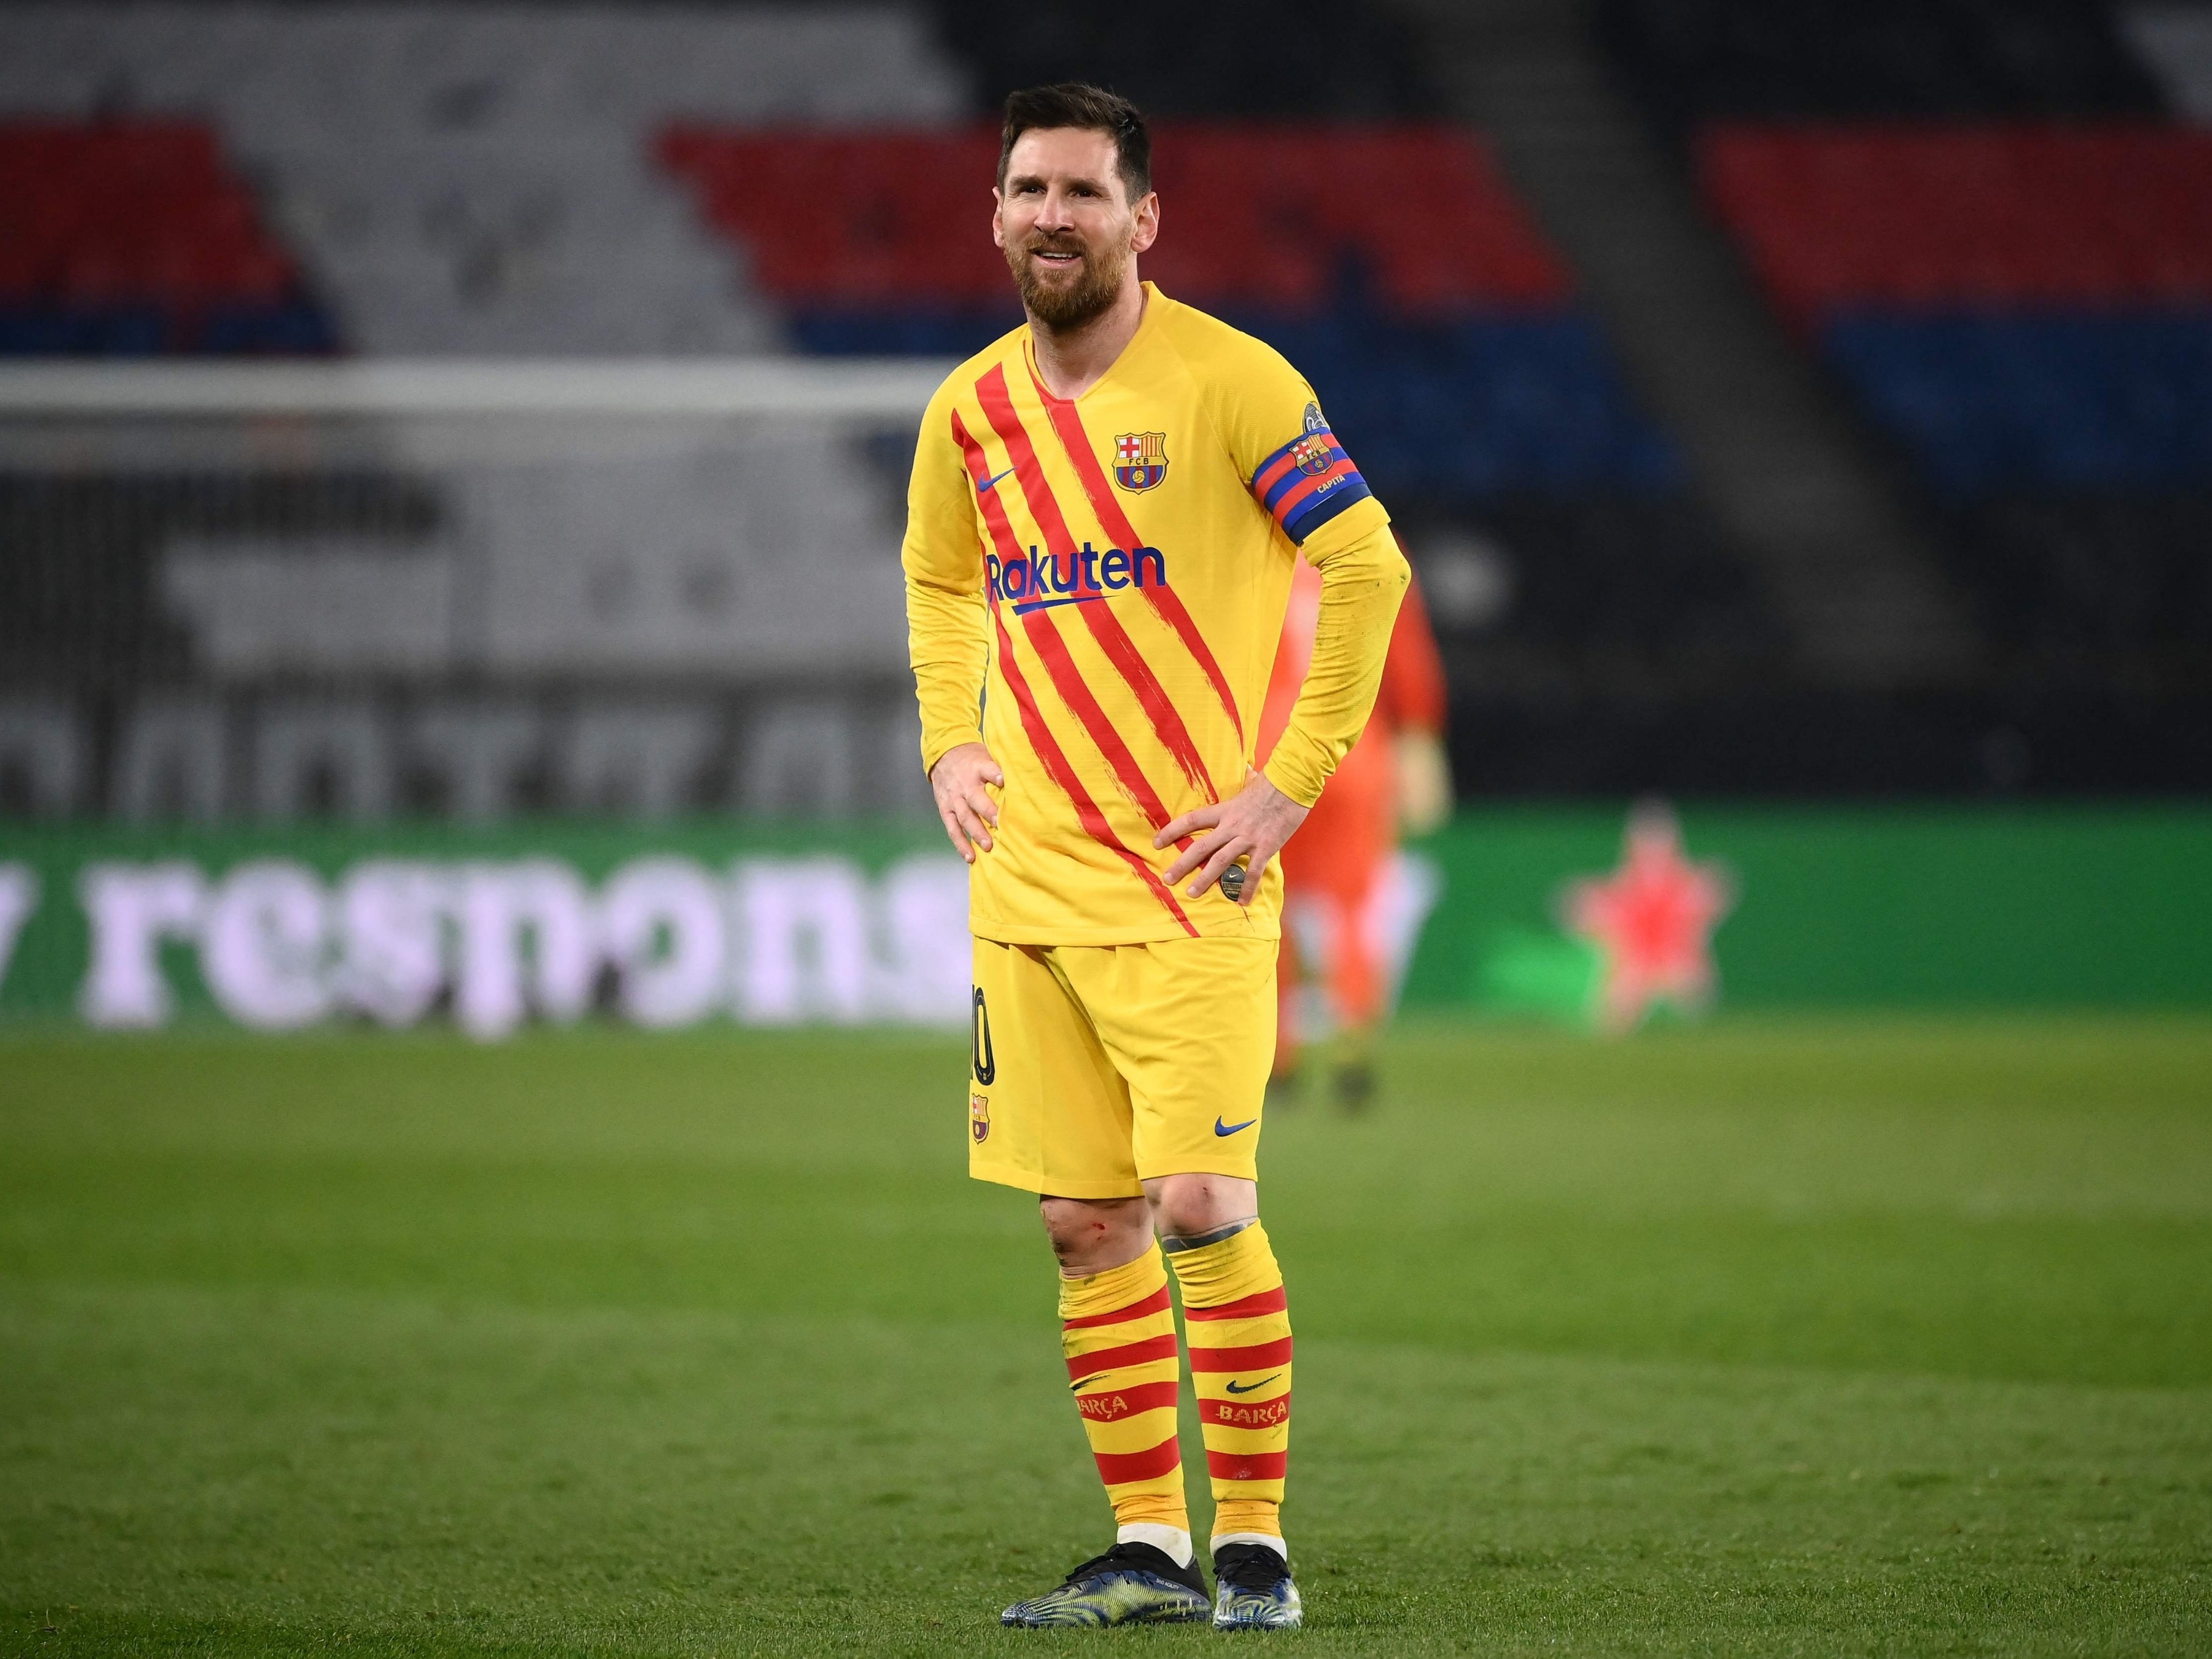 desimpedidos - Messi no Vasco?